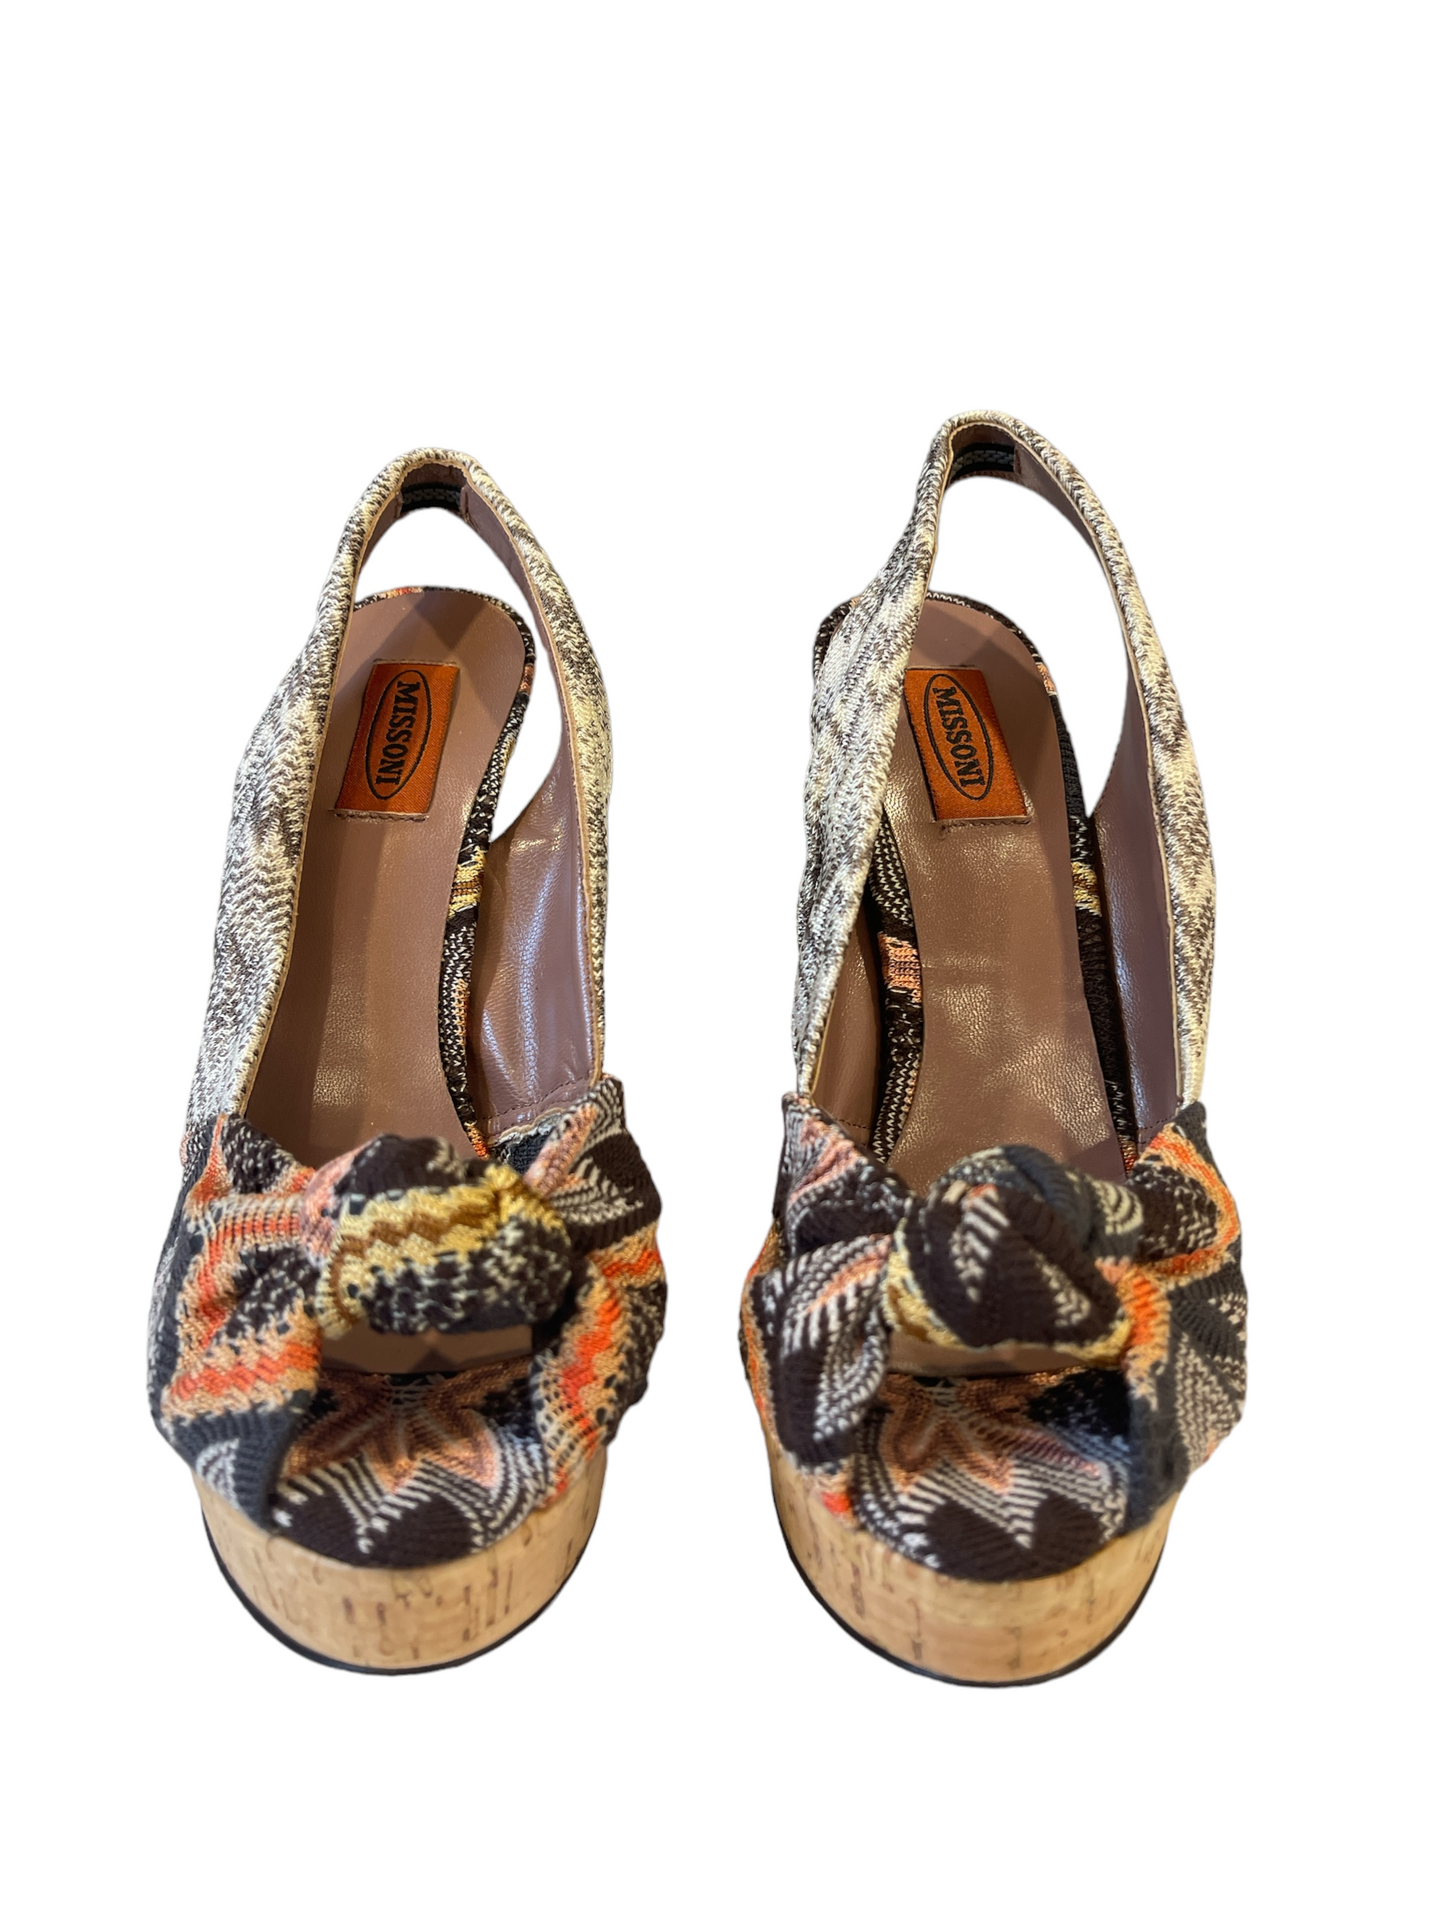 Missoni 'Treasure' Sling Back Patterned Fabric Wedge Heel | Size 40"